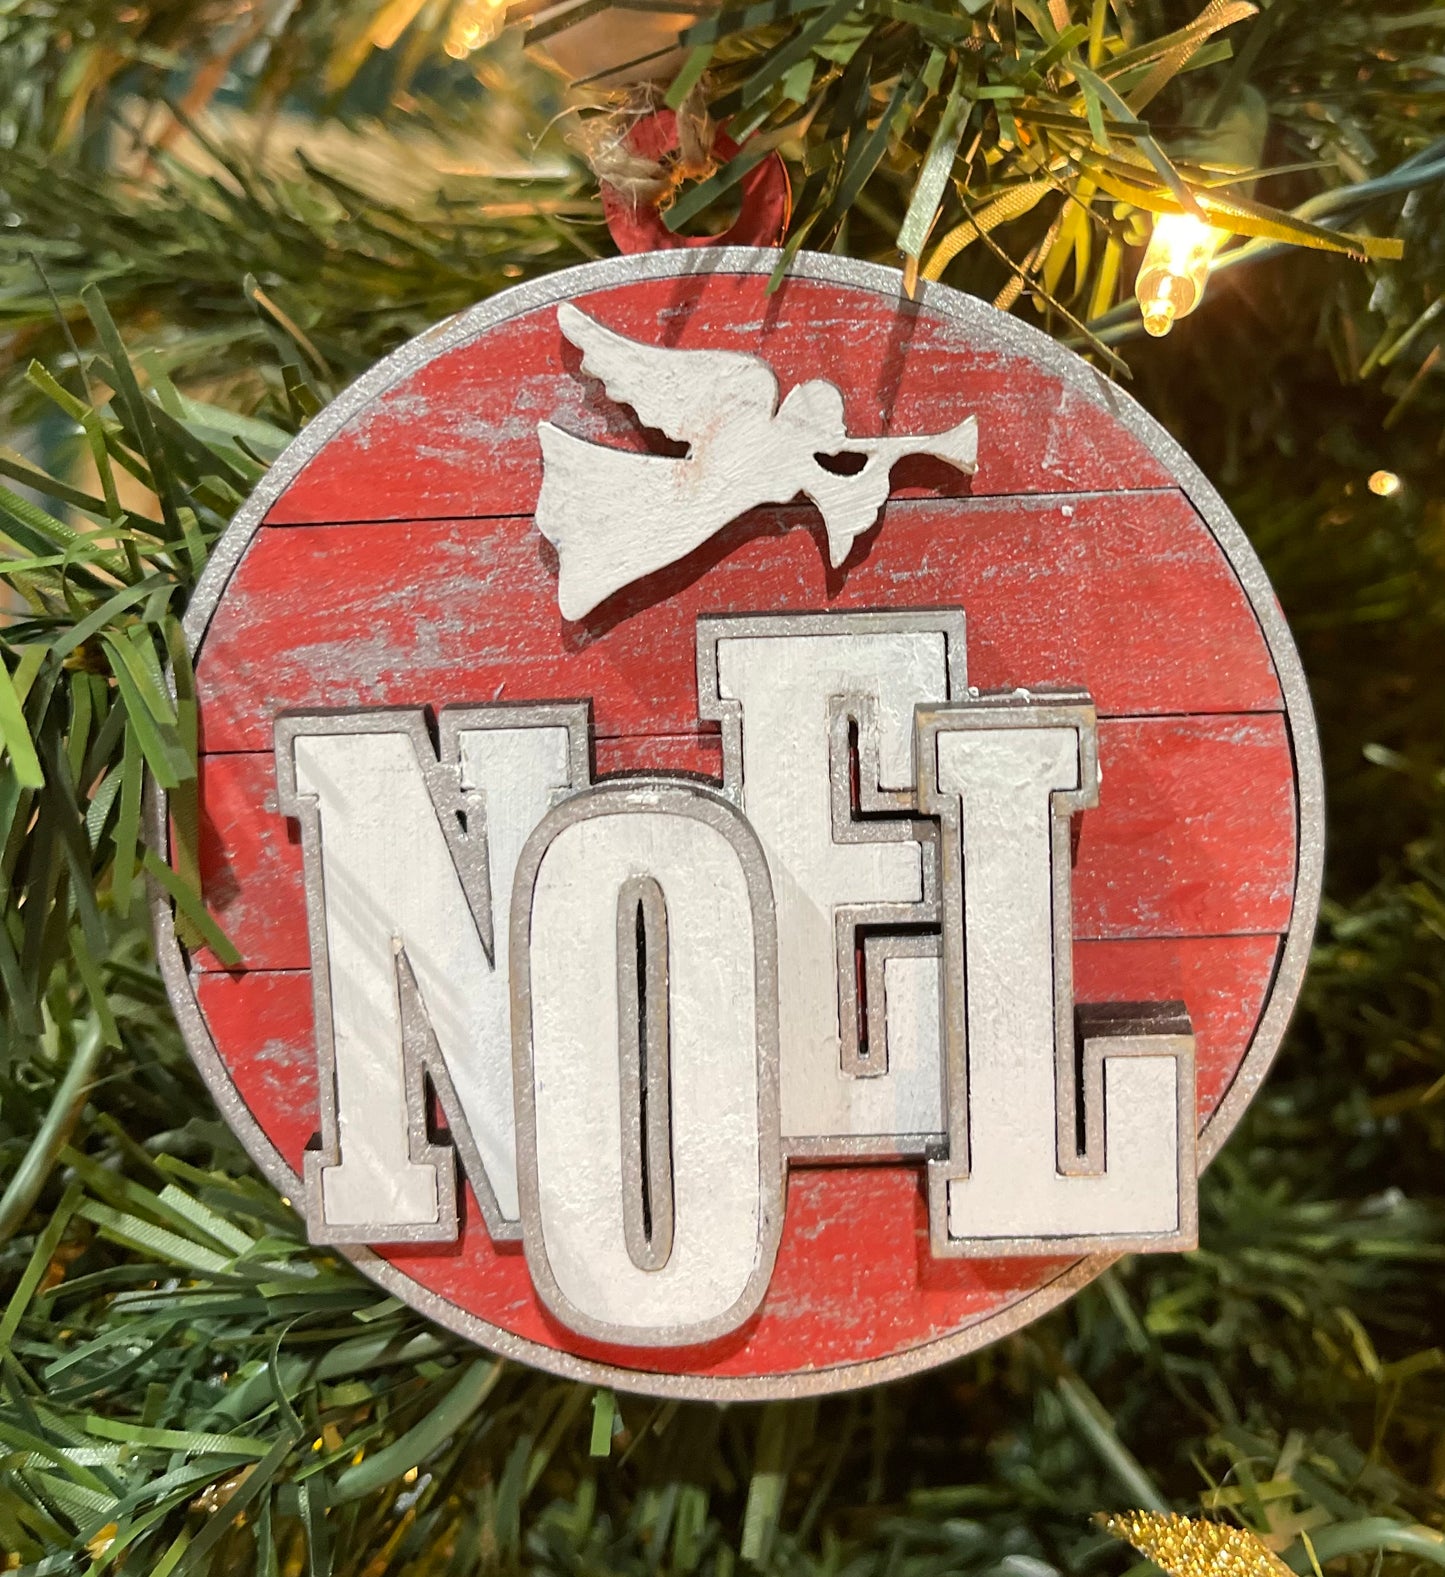 Peace Joy or Noel Ornament